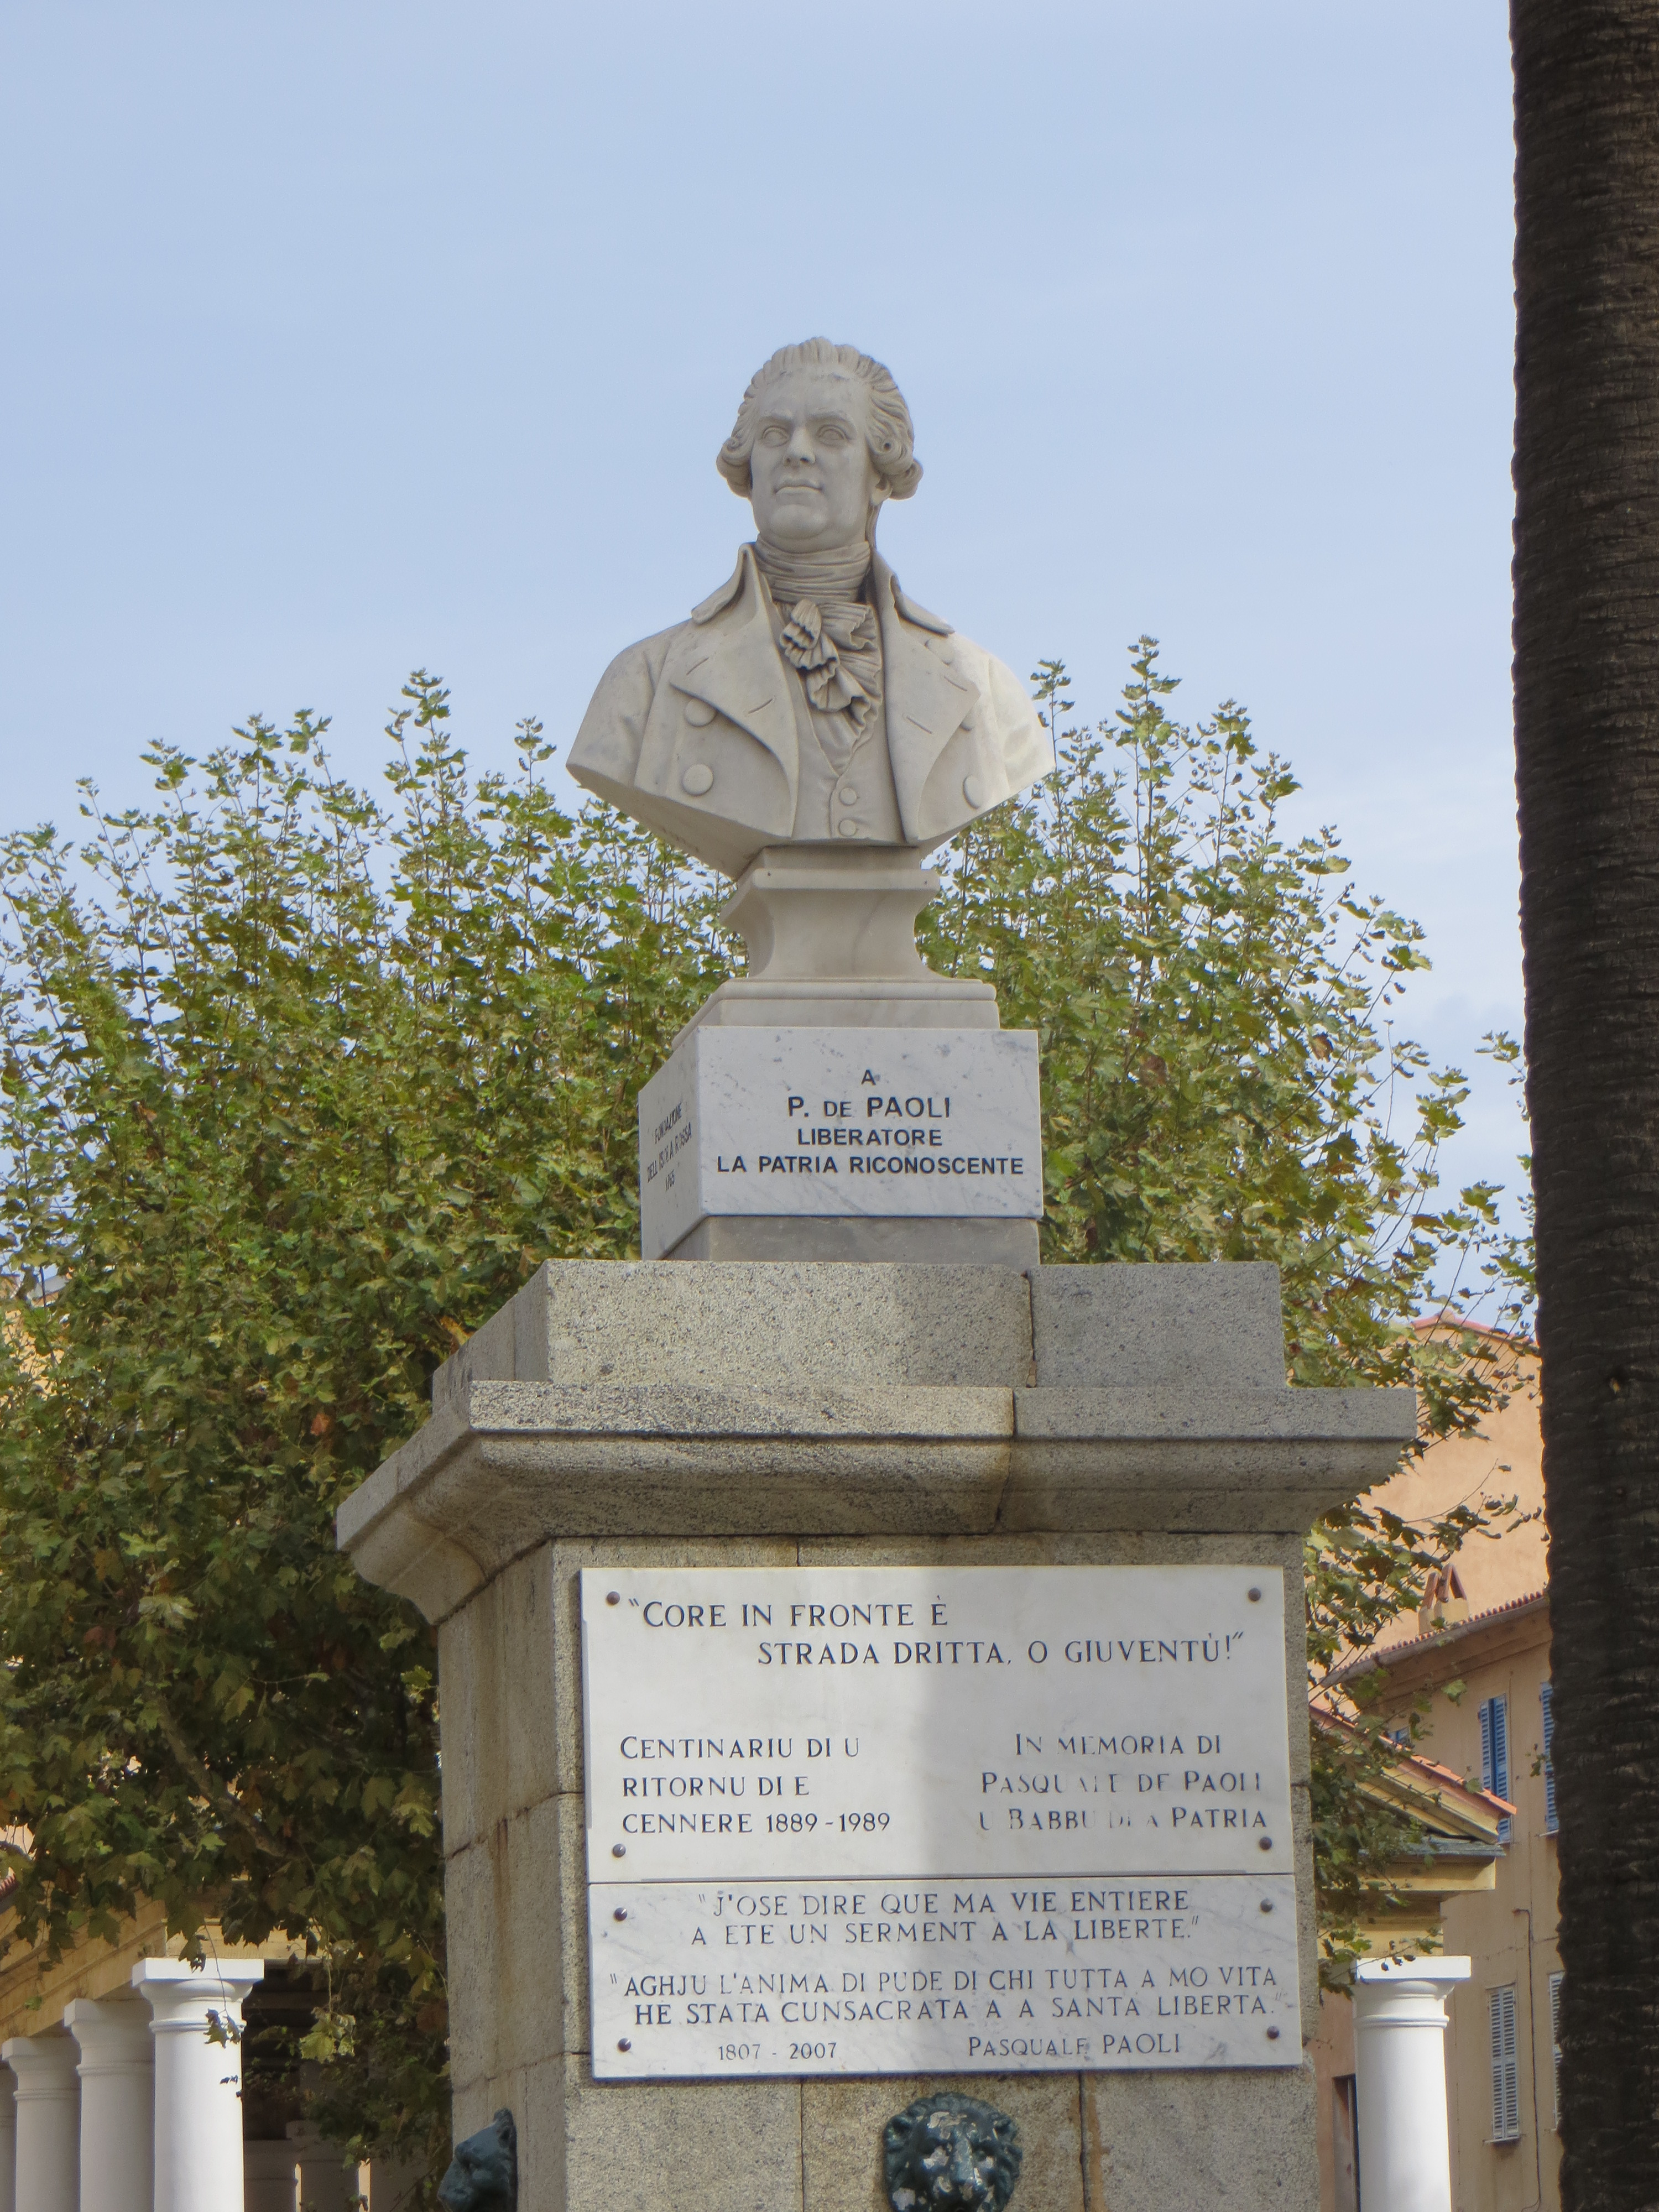 Pasquale Paoli bust